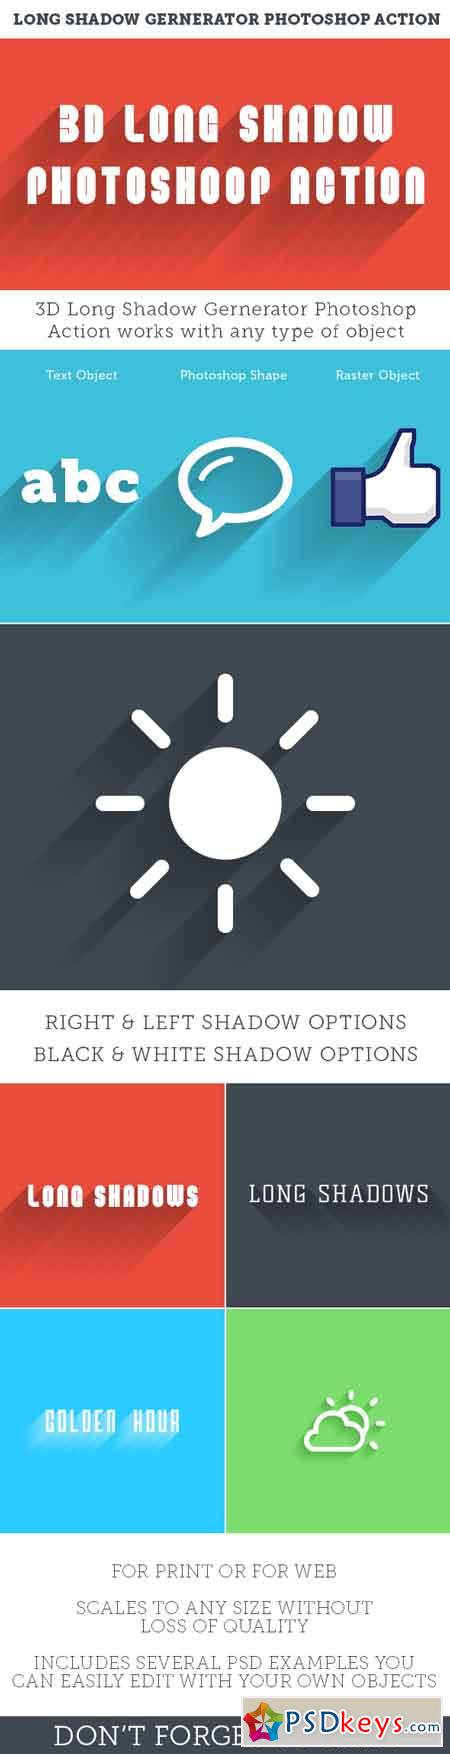 3d long shadow generator photoshop action set download